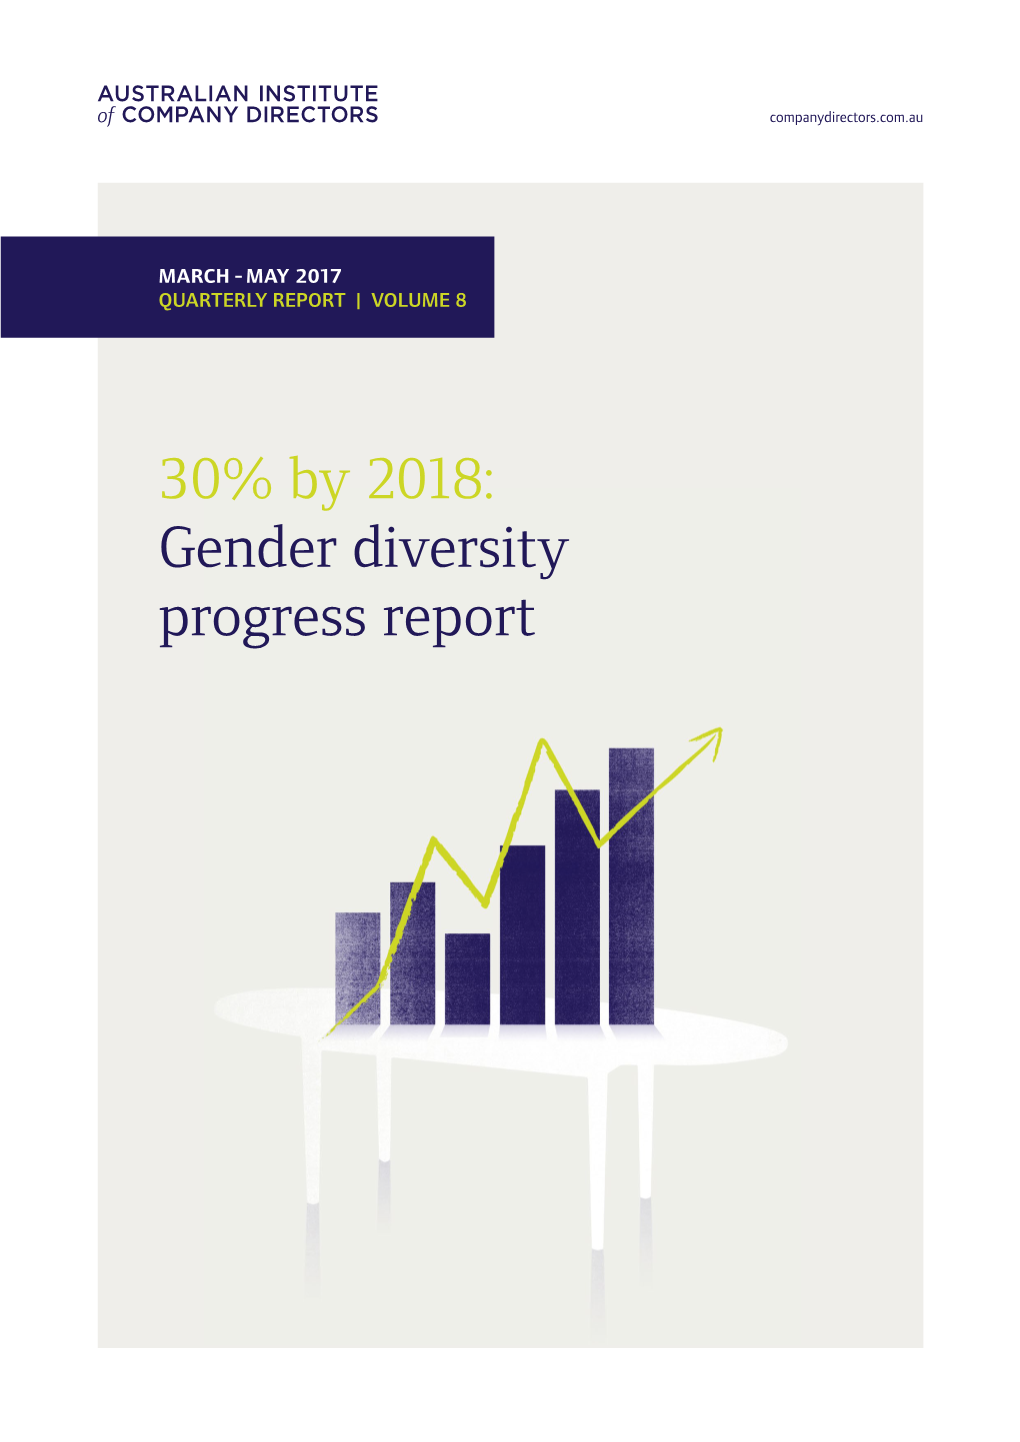 30% by 2018: Gender Diversity Progress Report (Quarterly Report